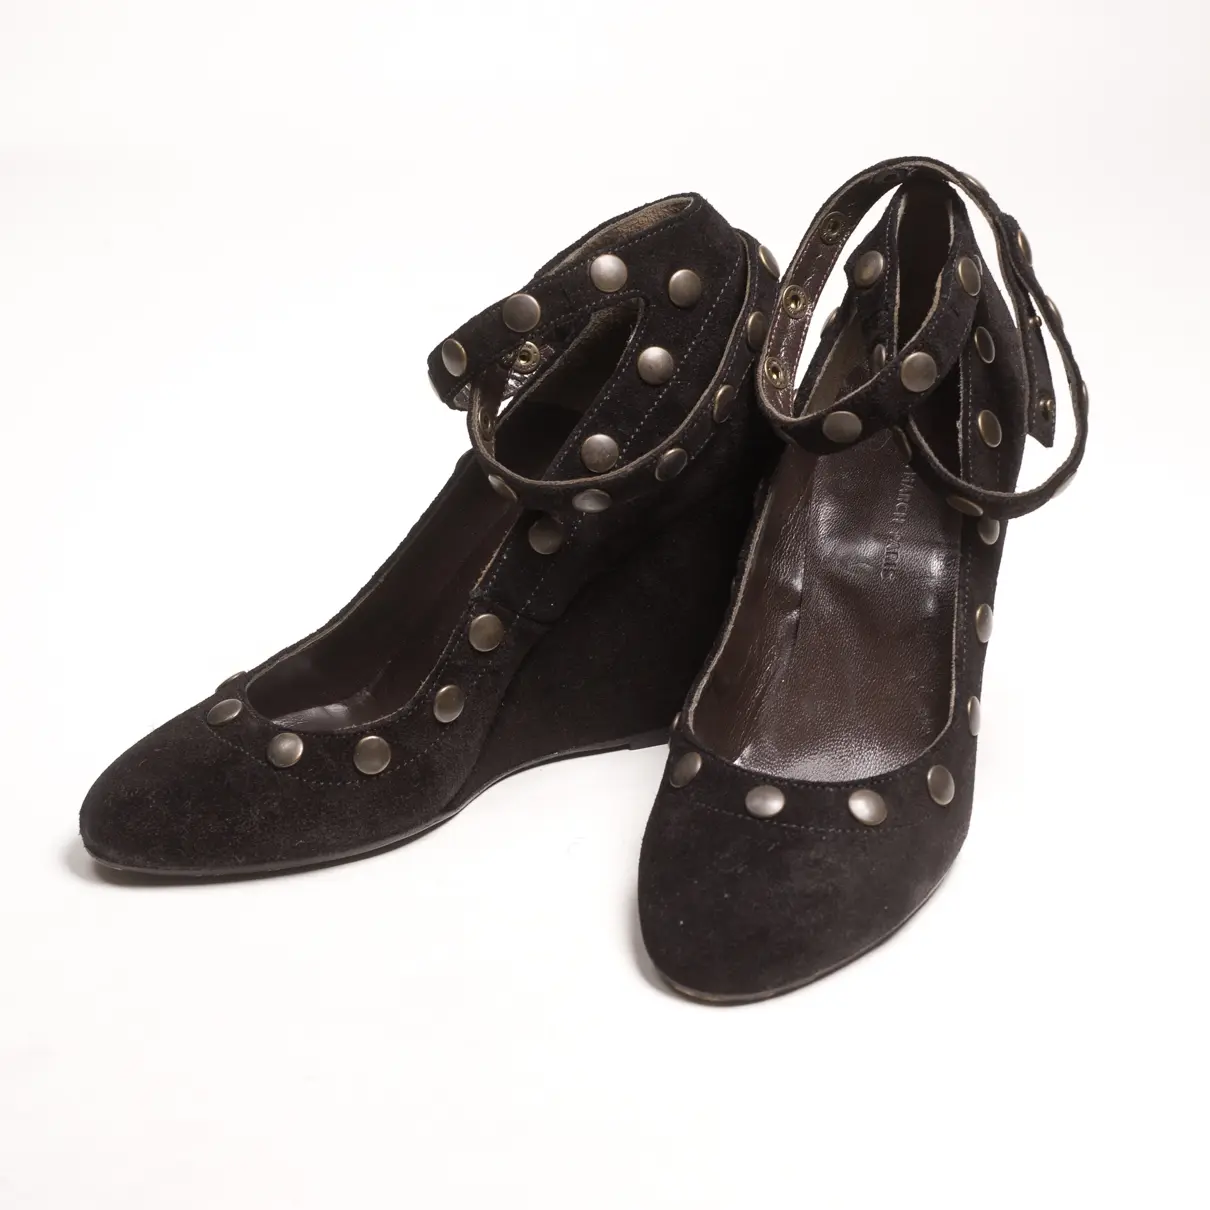 Tila March Heels for sale